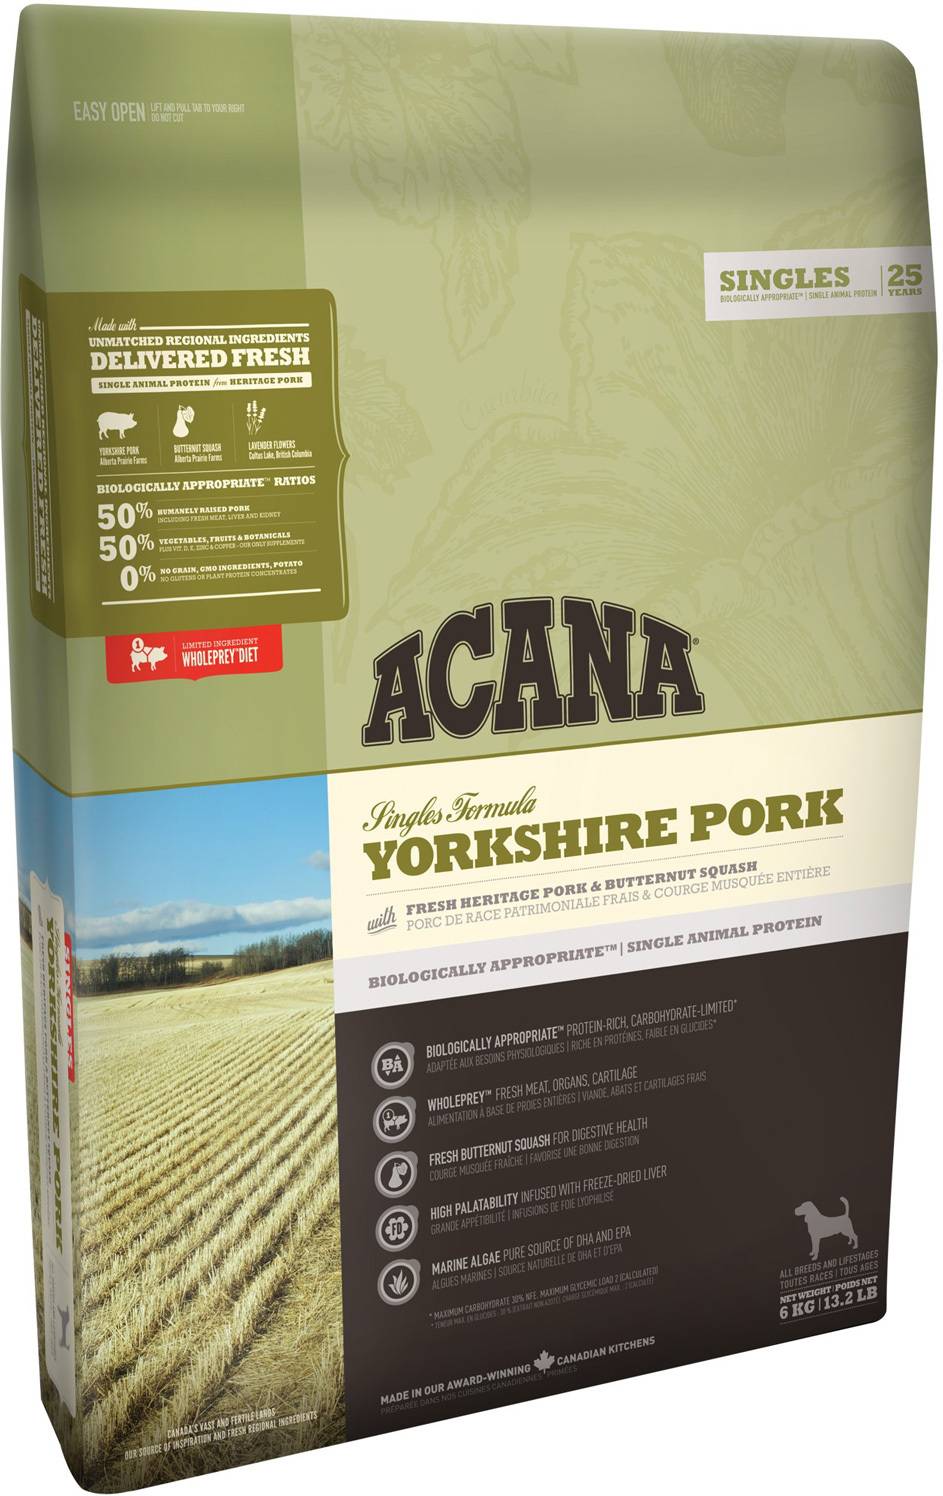 Acana Yorkshire Pork & Butternut Squash